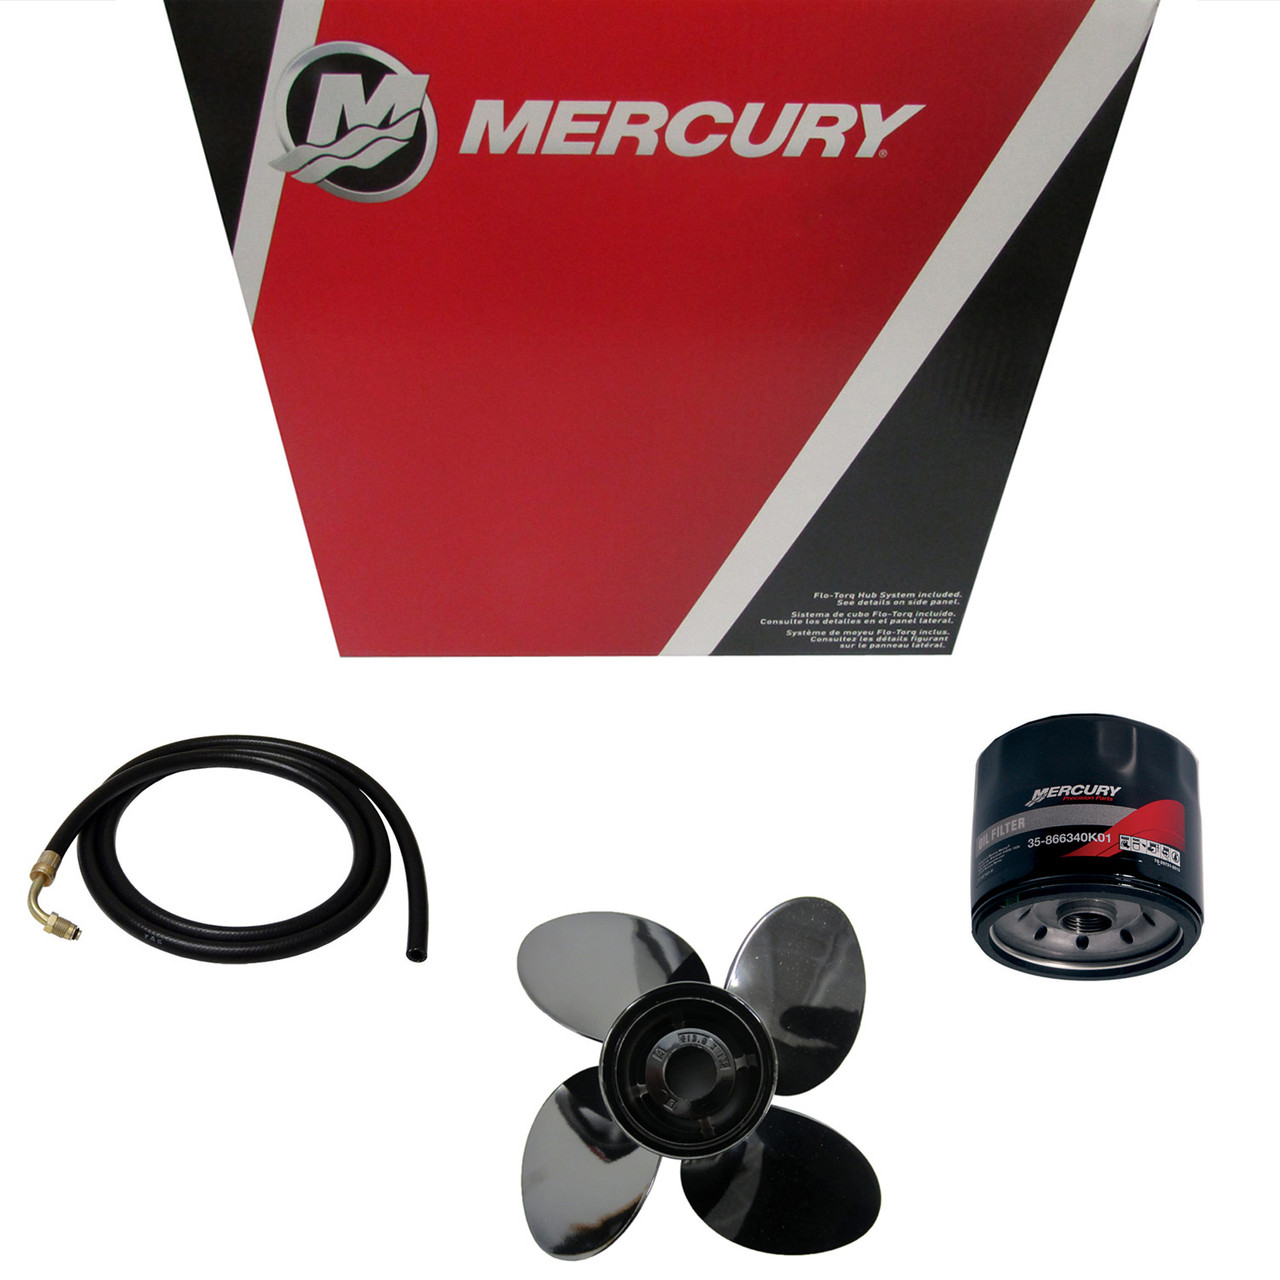 Mercury Marine/Mercruiser  New OEM HOSE KIT 32-880596A05